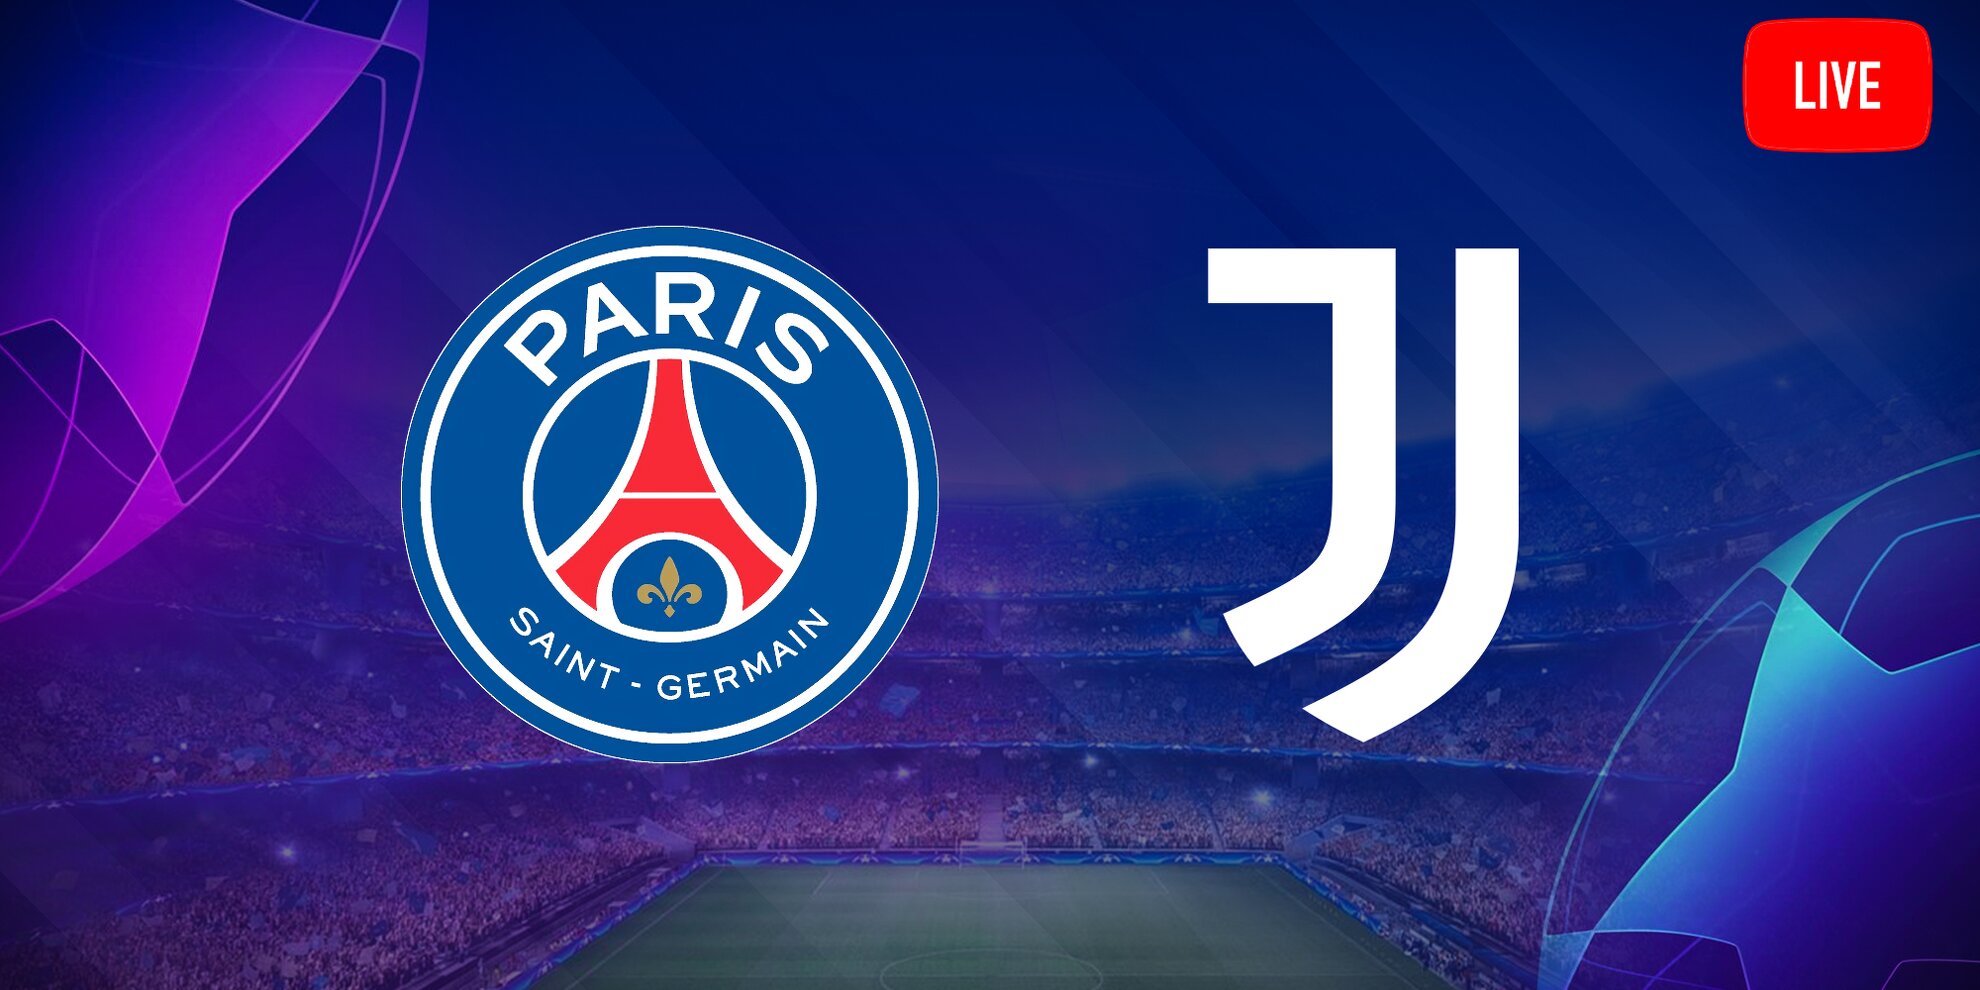 UEFA Champions League 2022-23: PSG vs Juventus Live Updates